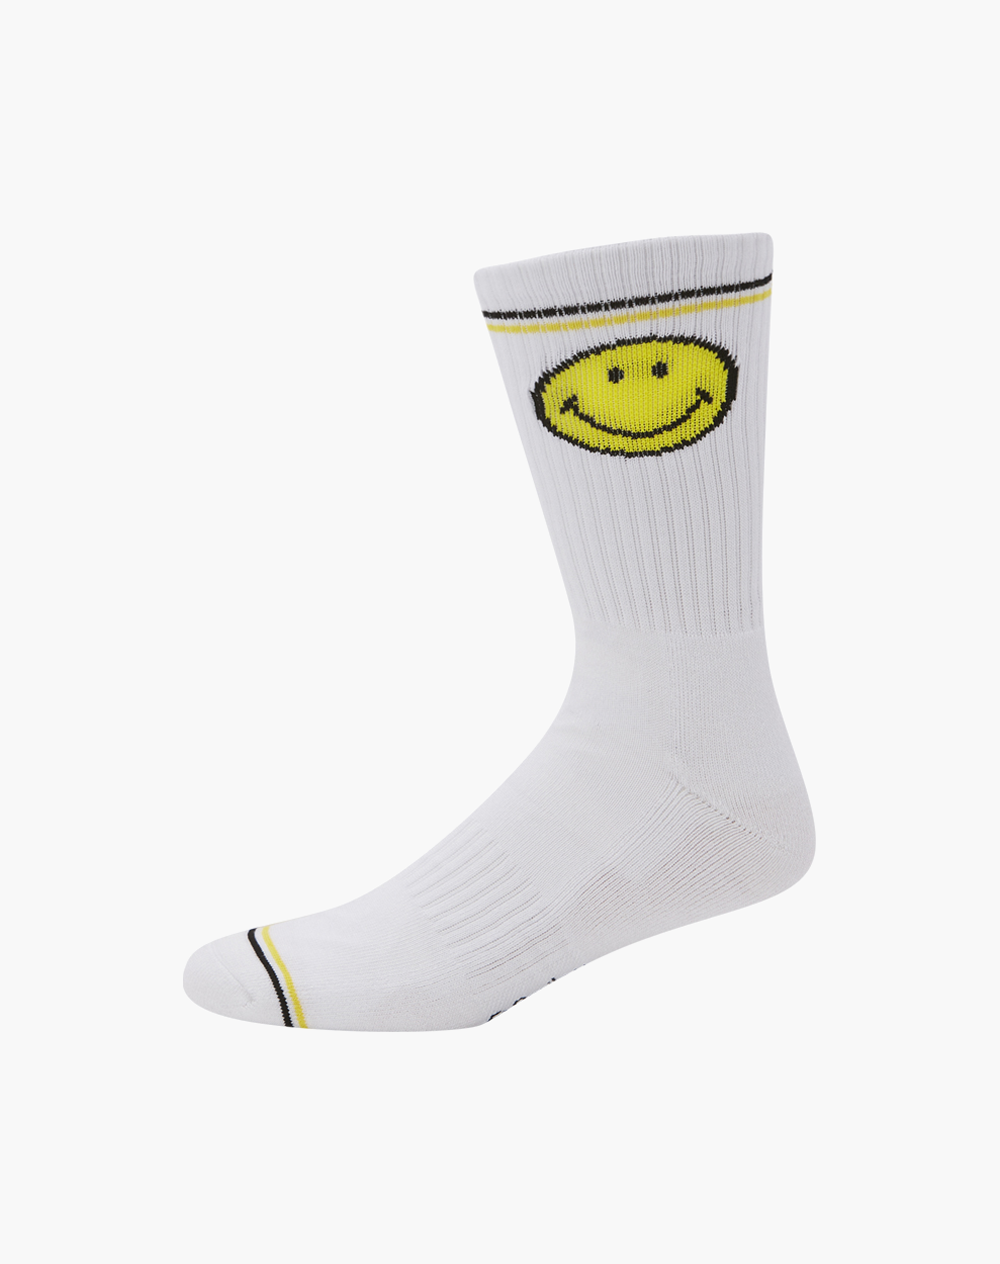 $5 Frenzy Socks